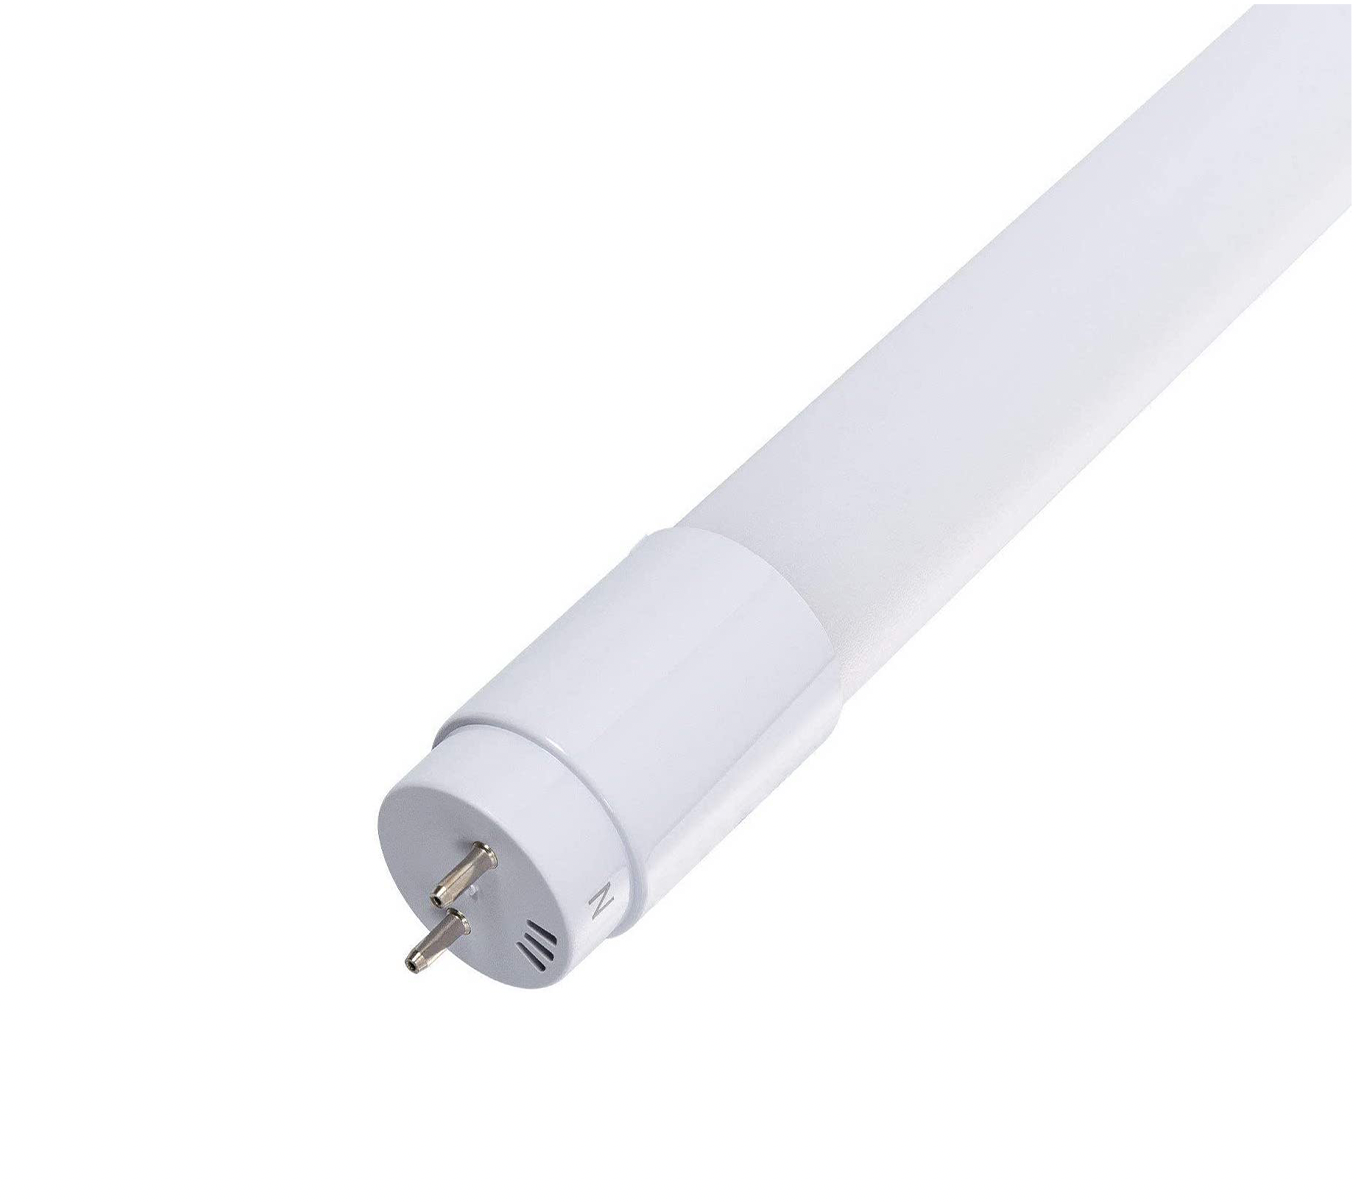 Geld rubber Middeleeuws drempel LED TL buis 120 cm - 18W vervangt 36W - 3000K 830 warm wit licht -  Ledlichtdiscounter.nl